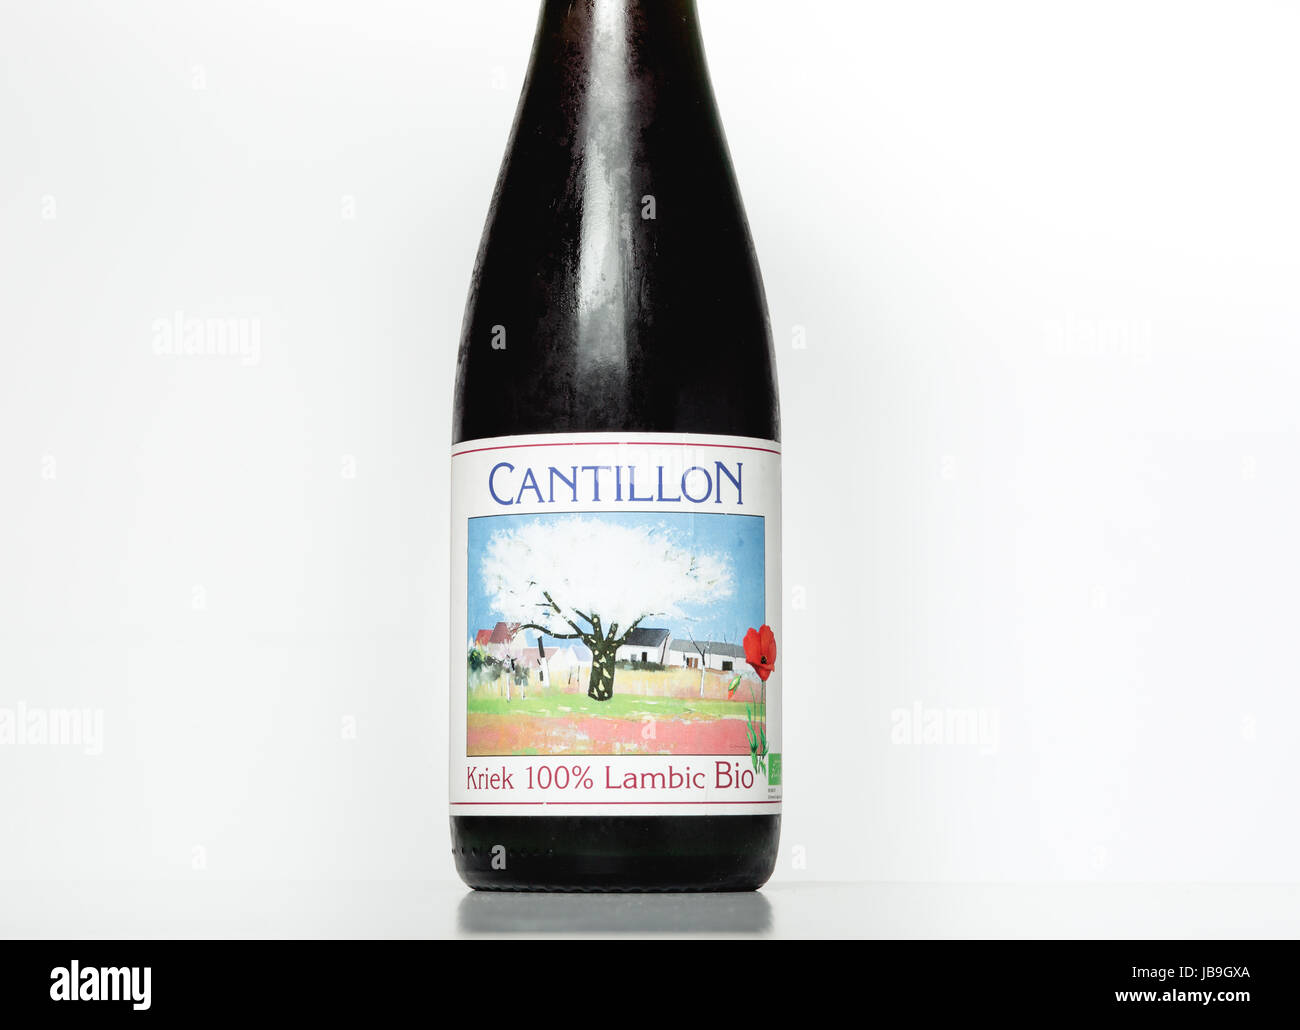 Cantillon - Kriek Lambic Beer Stock Photo